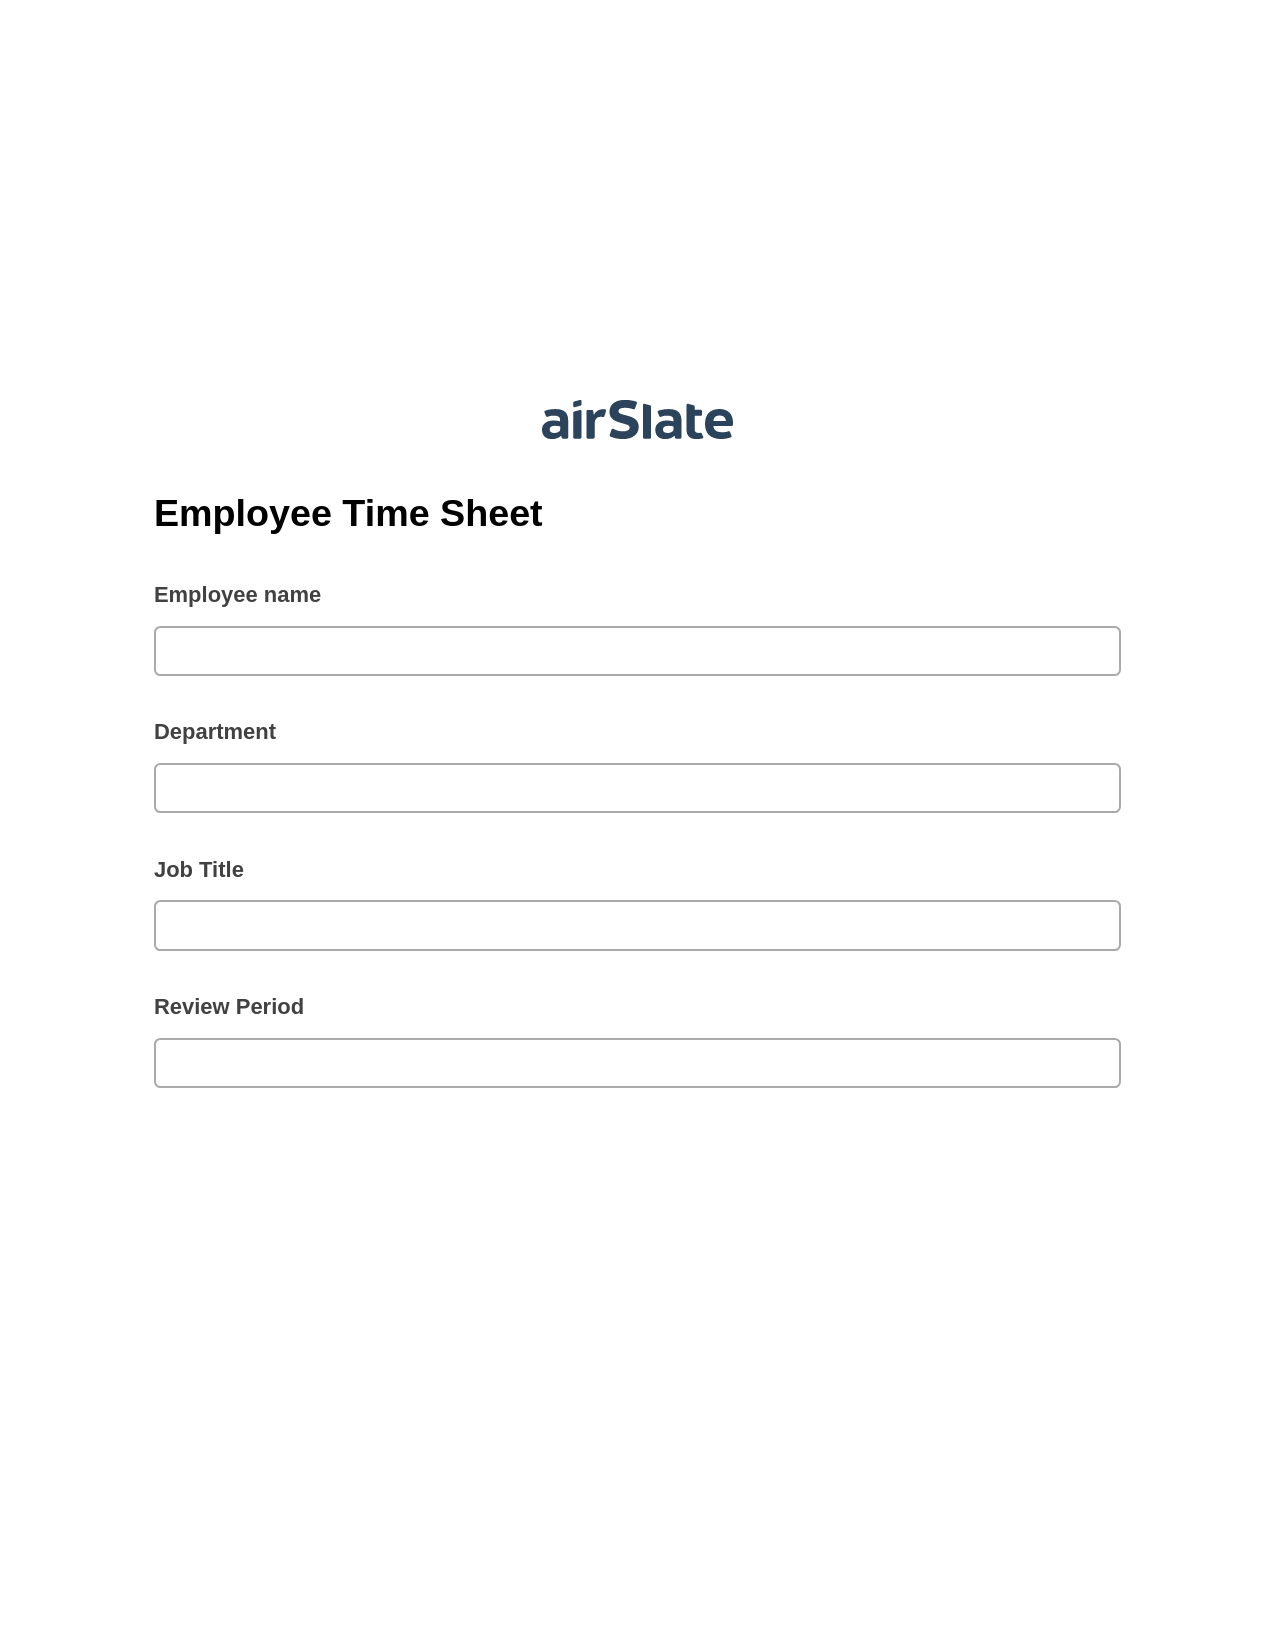 Multirole Employee Time Sheet Pre-fill from CSV File Bot, Create Salesforce Records Bot, Slack Notification Postfinish Bot